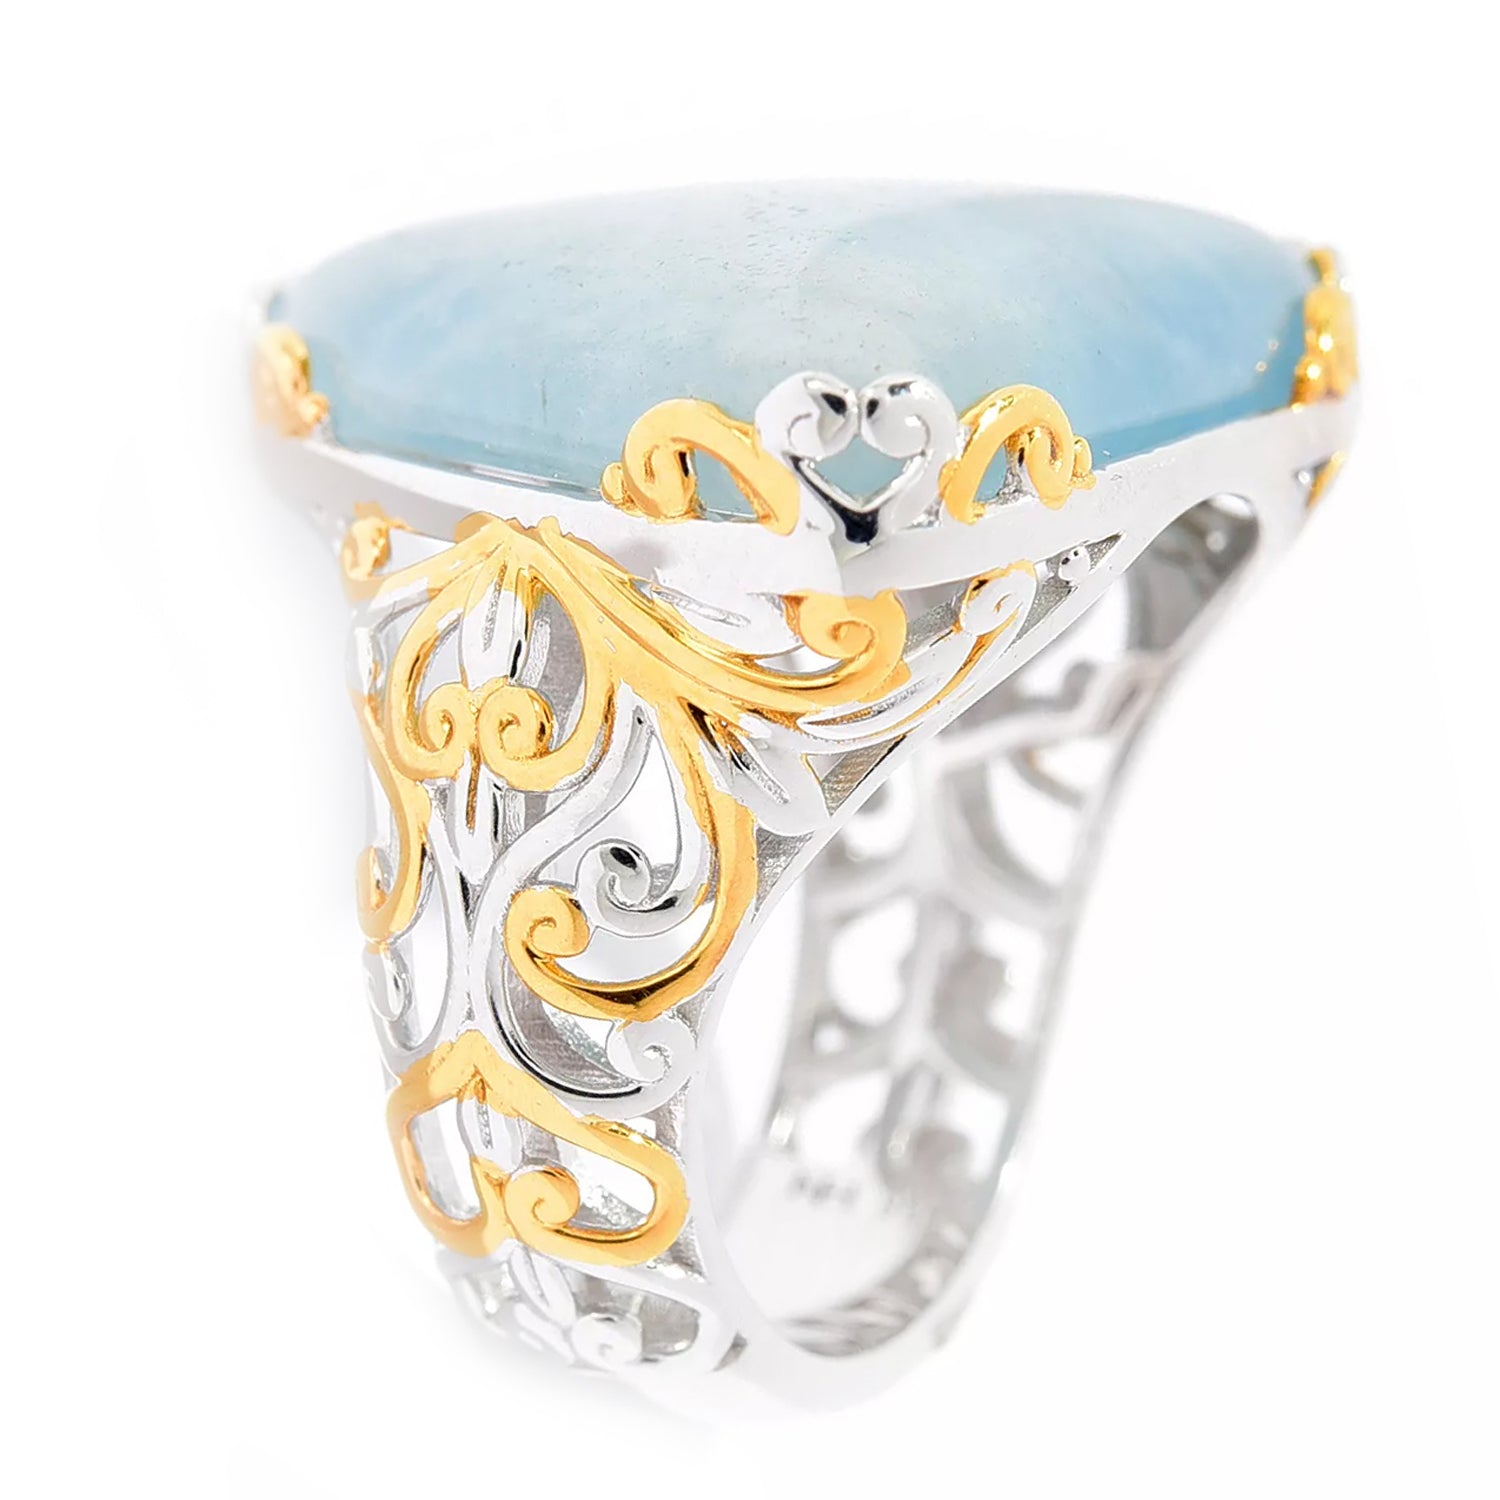 Gems en Vogue Trillion Aquamarine Ring